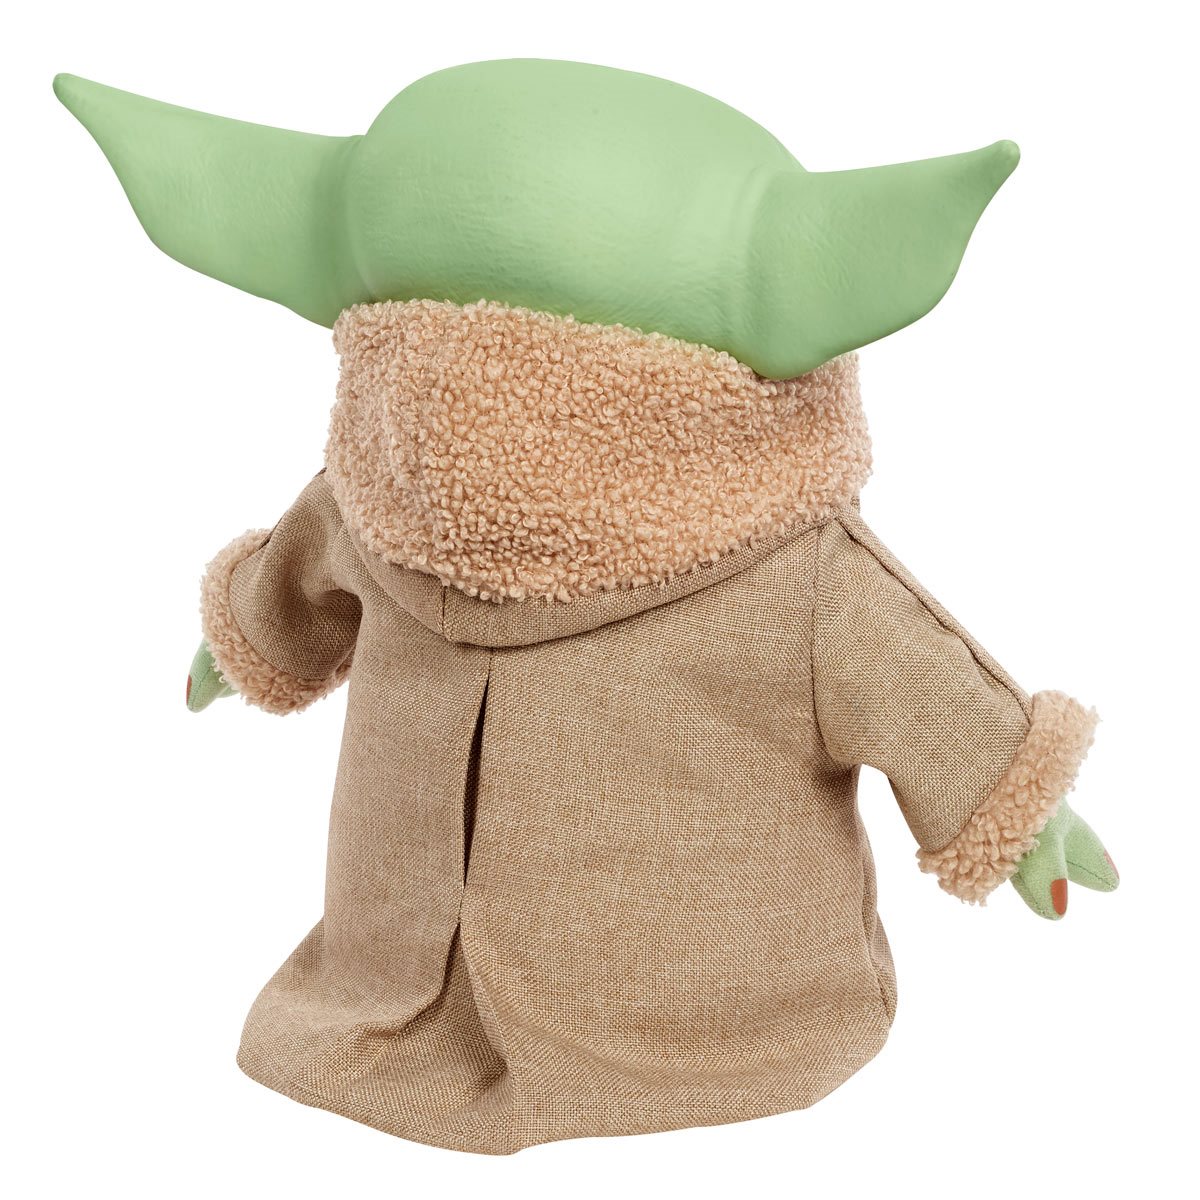 Baby Yoda Plush Stuffed Animal 8 inch Grogu Doll Star Wars The